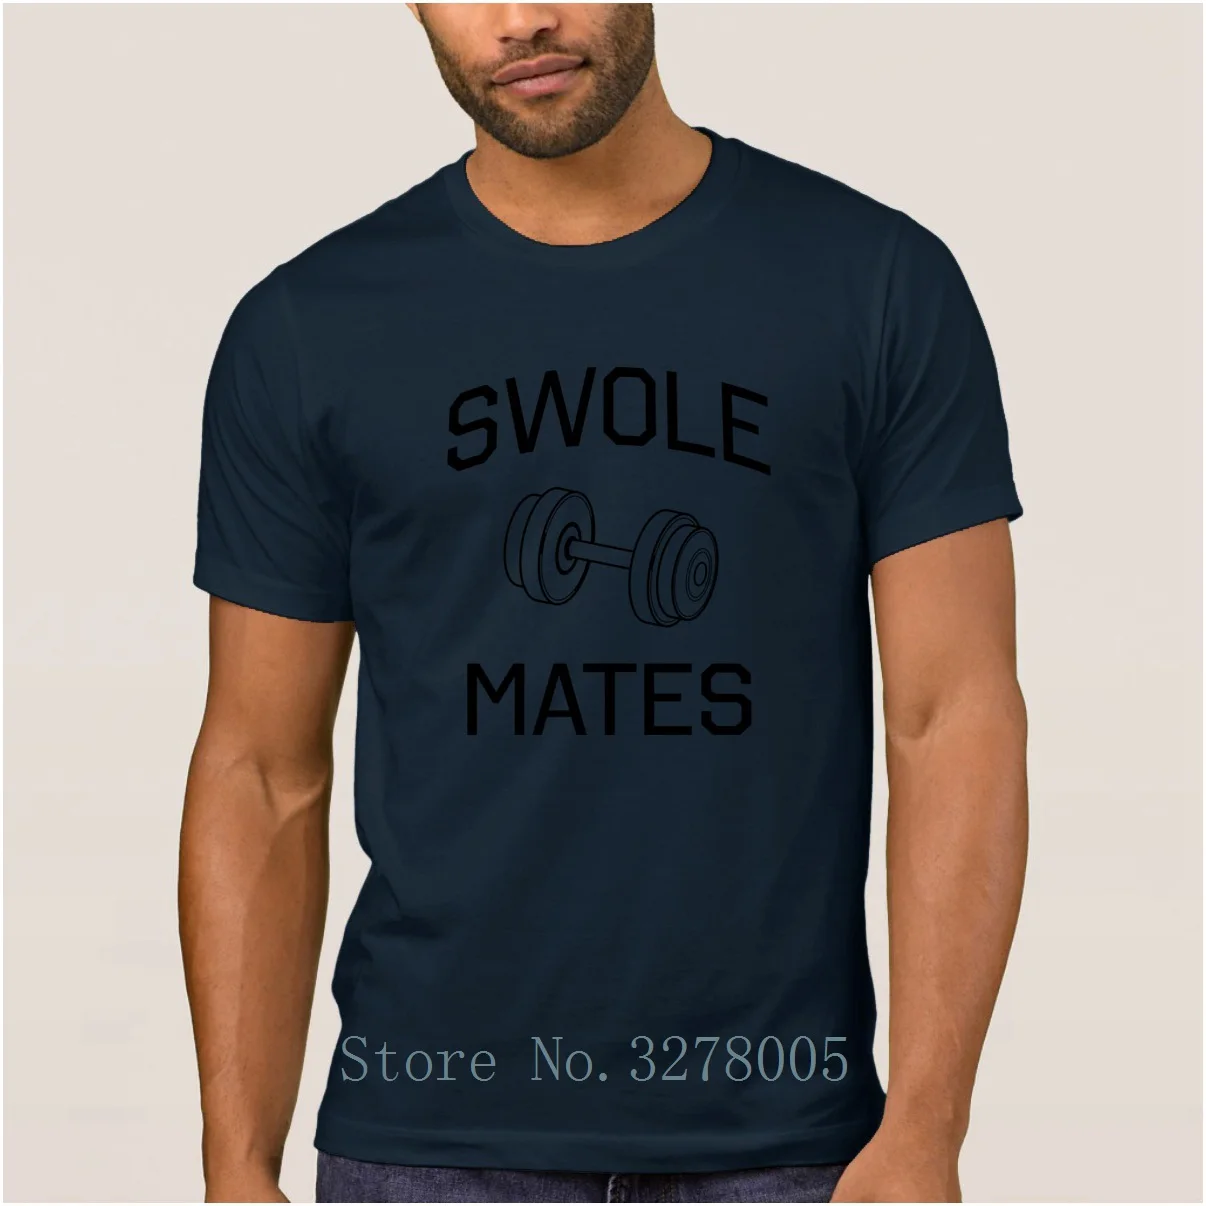 Make Own Brand La Maxpa Swole Mates футболки забавная Повседневная футболка мужская летняя